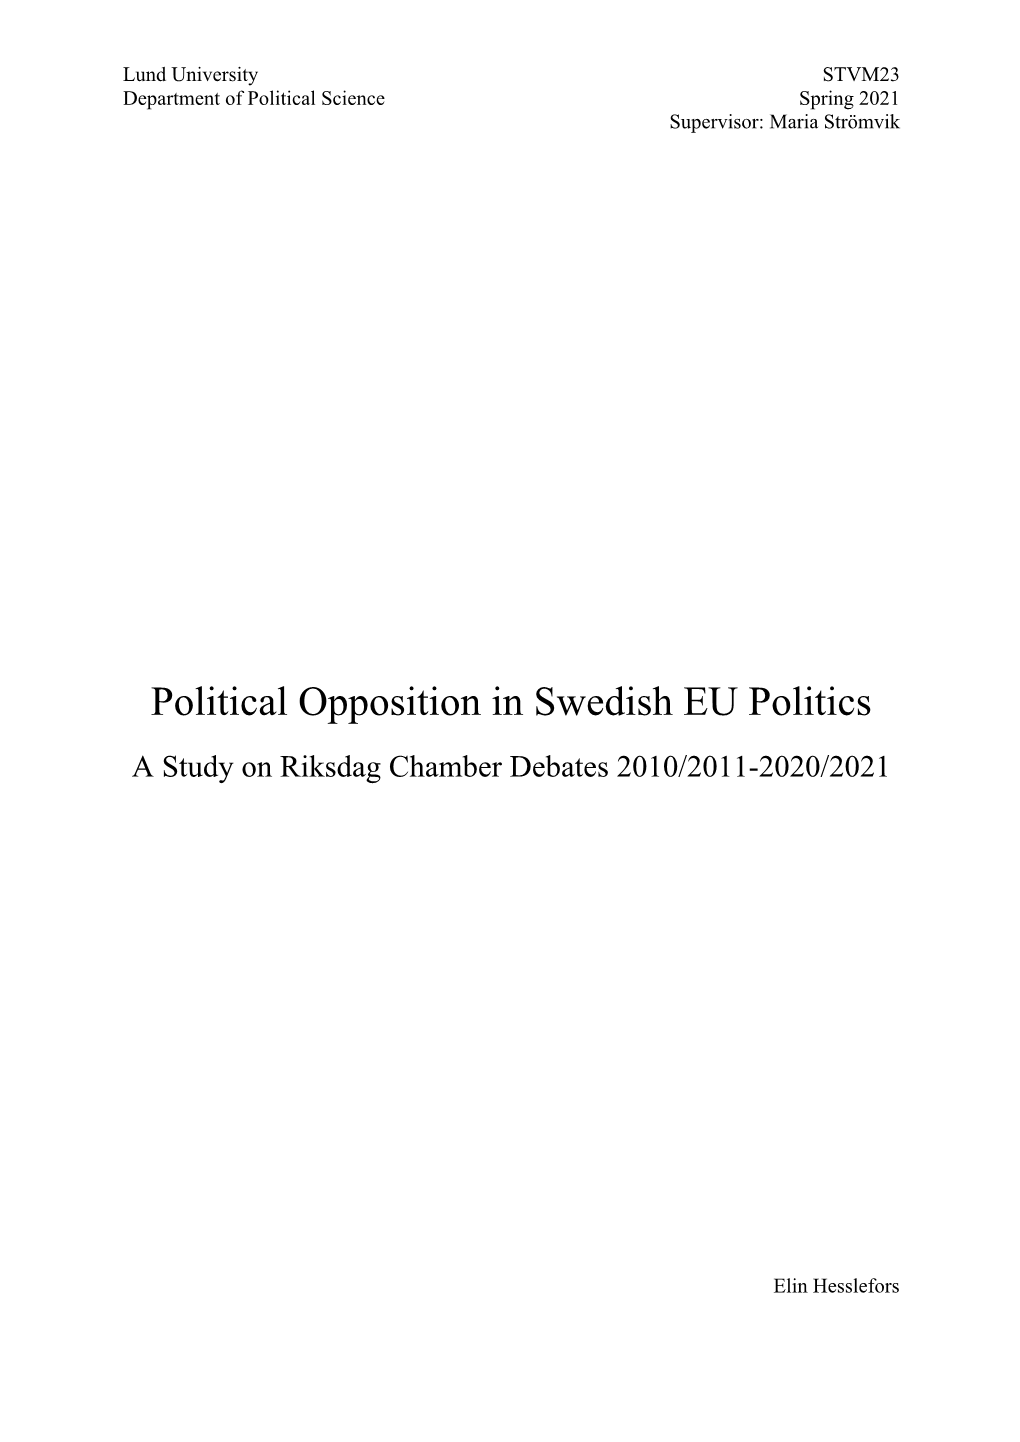 Political Opposition in Swedish EU Politics a Study on Riksdag Chamber Debates 2010/2011-2020/2021